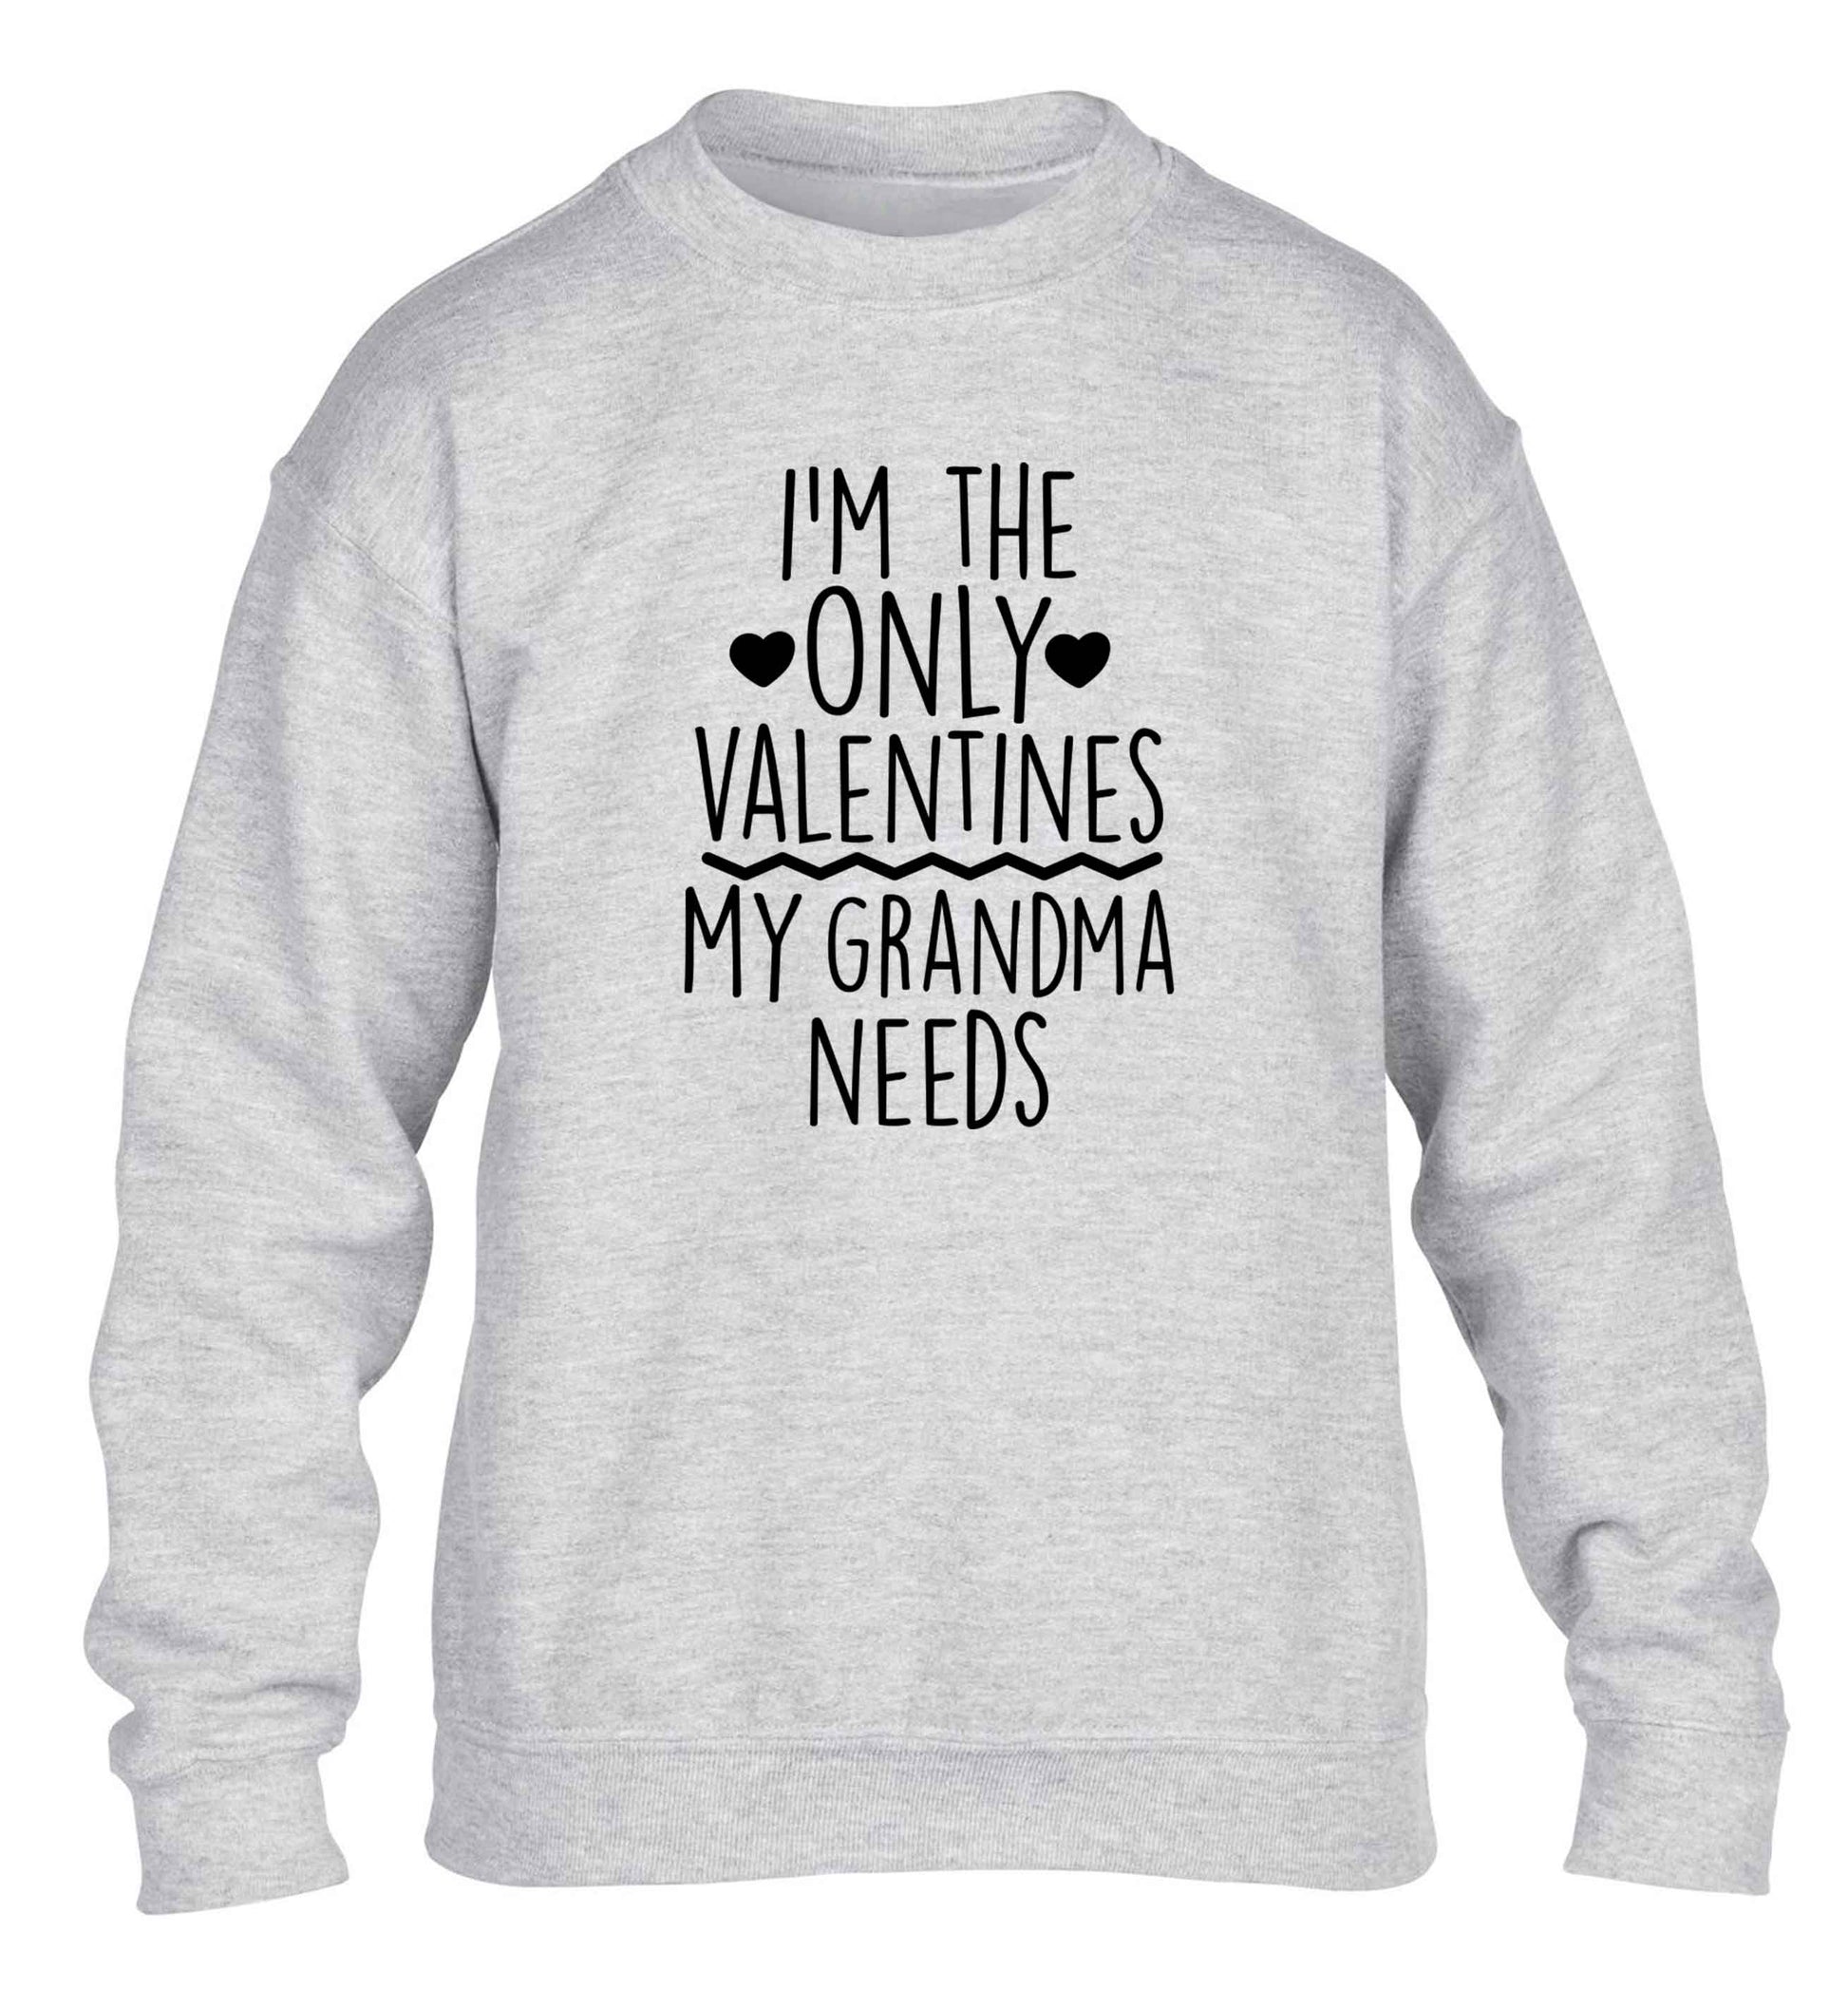 I'm the only valentines my grandma needs children's grey sweater 12-13 Years